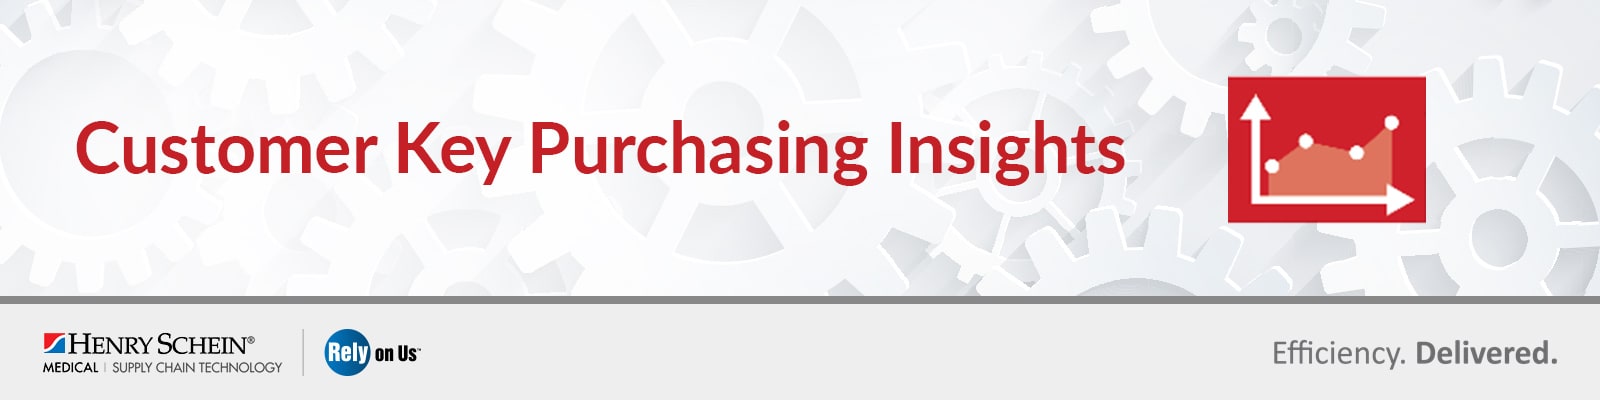 Customer Key Purchasing Insights - Henry Schein Medical